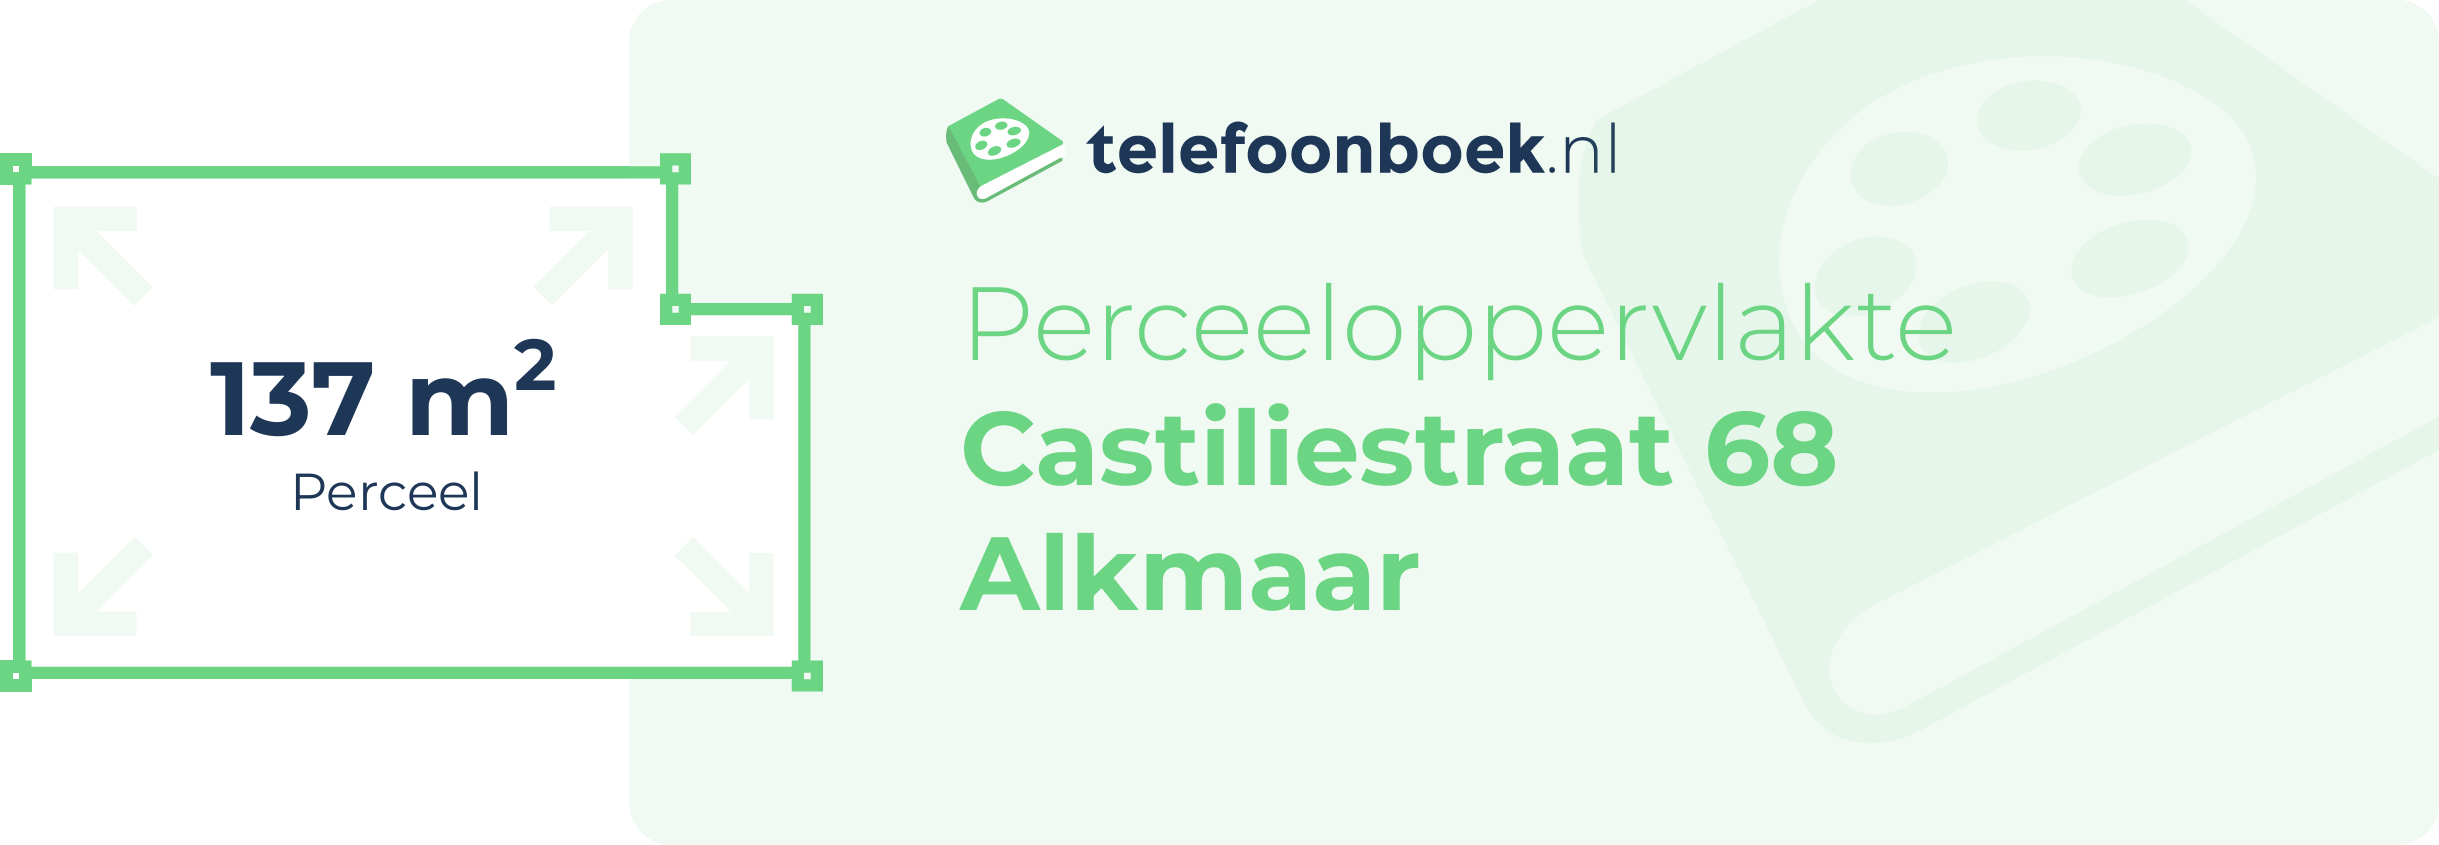 Perceeloppervlakte Castiliestraat 68 Alkmaar